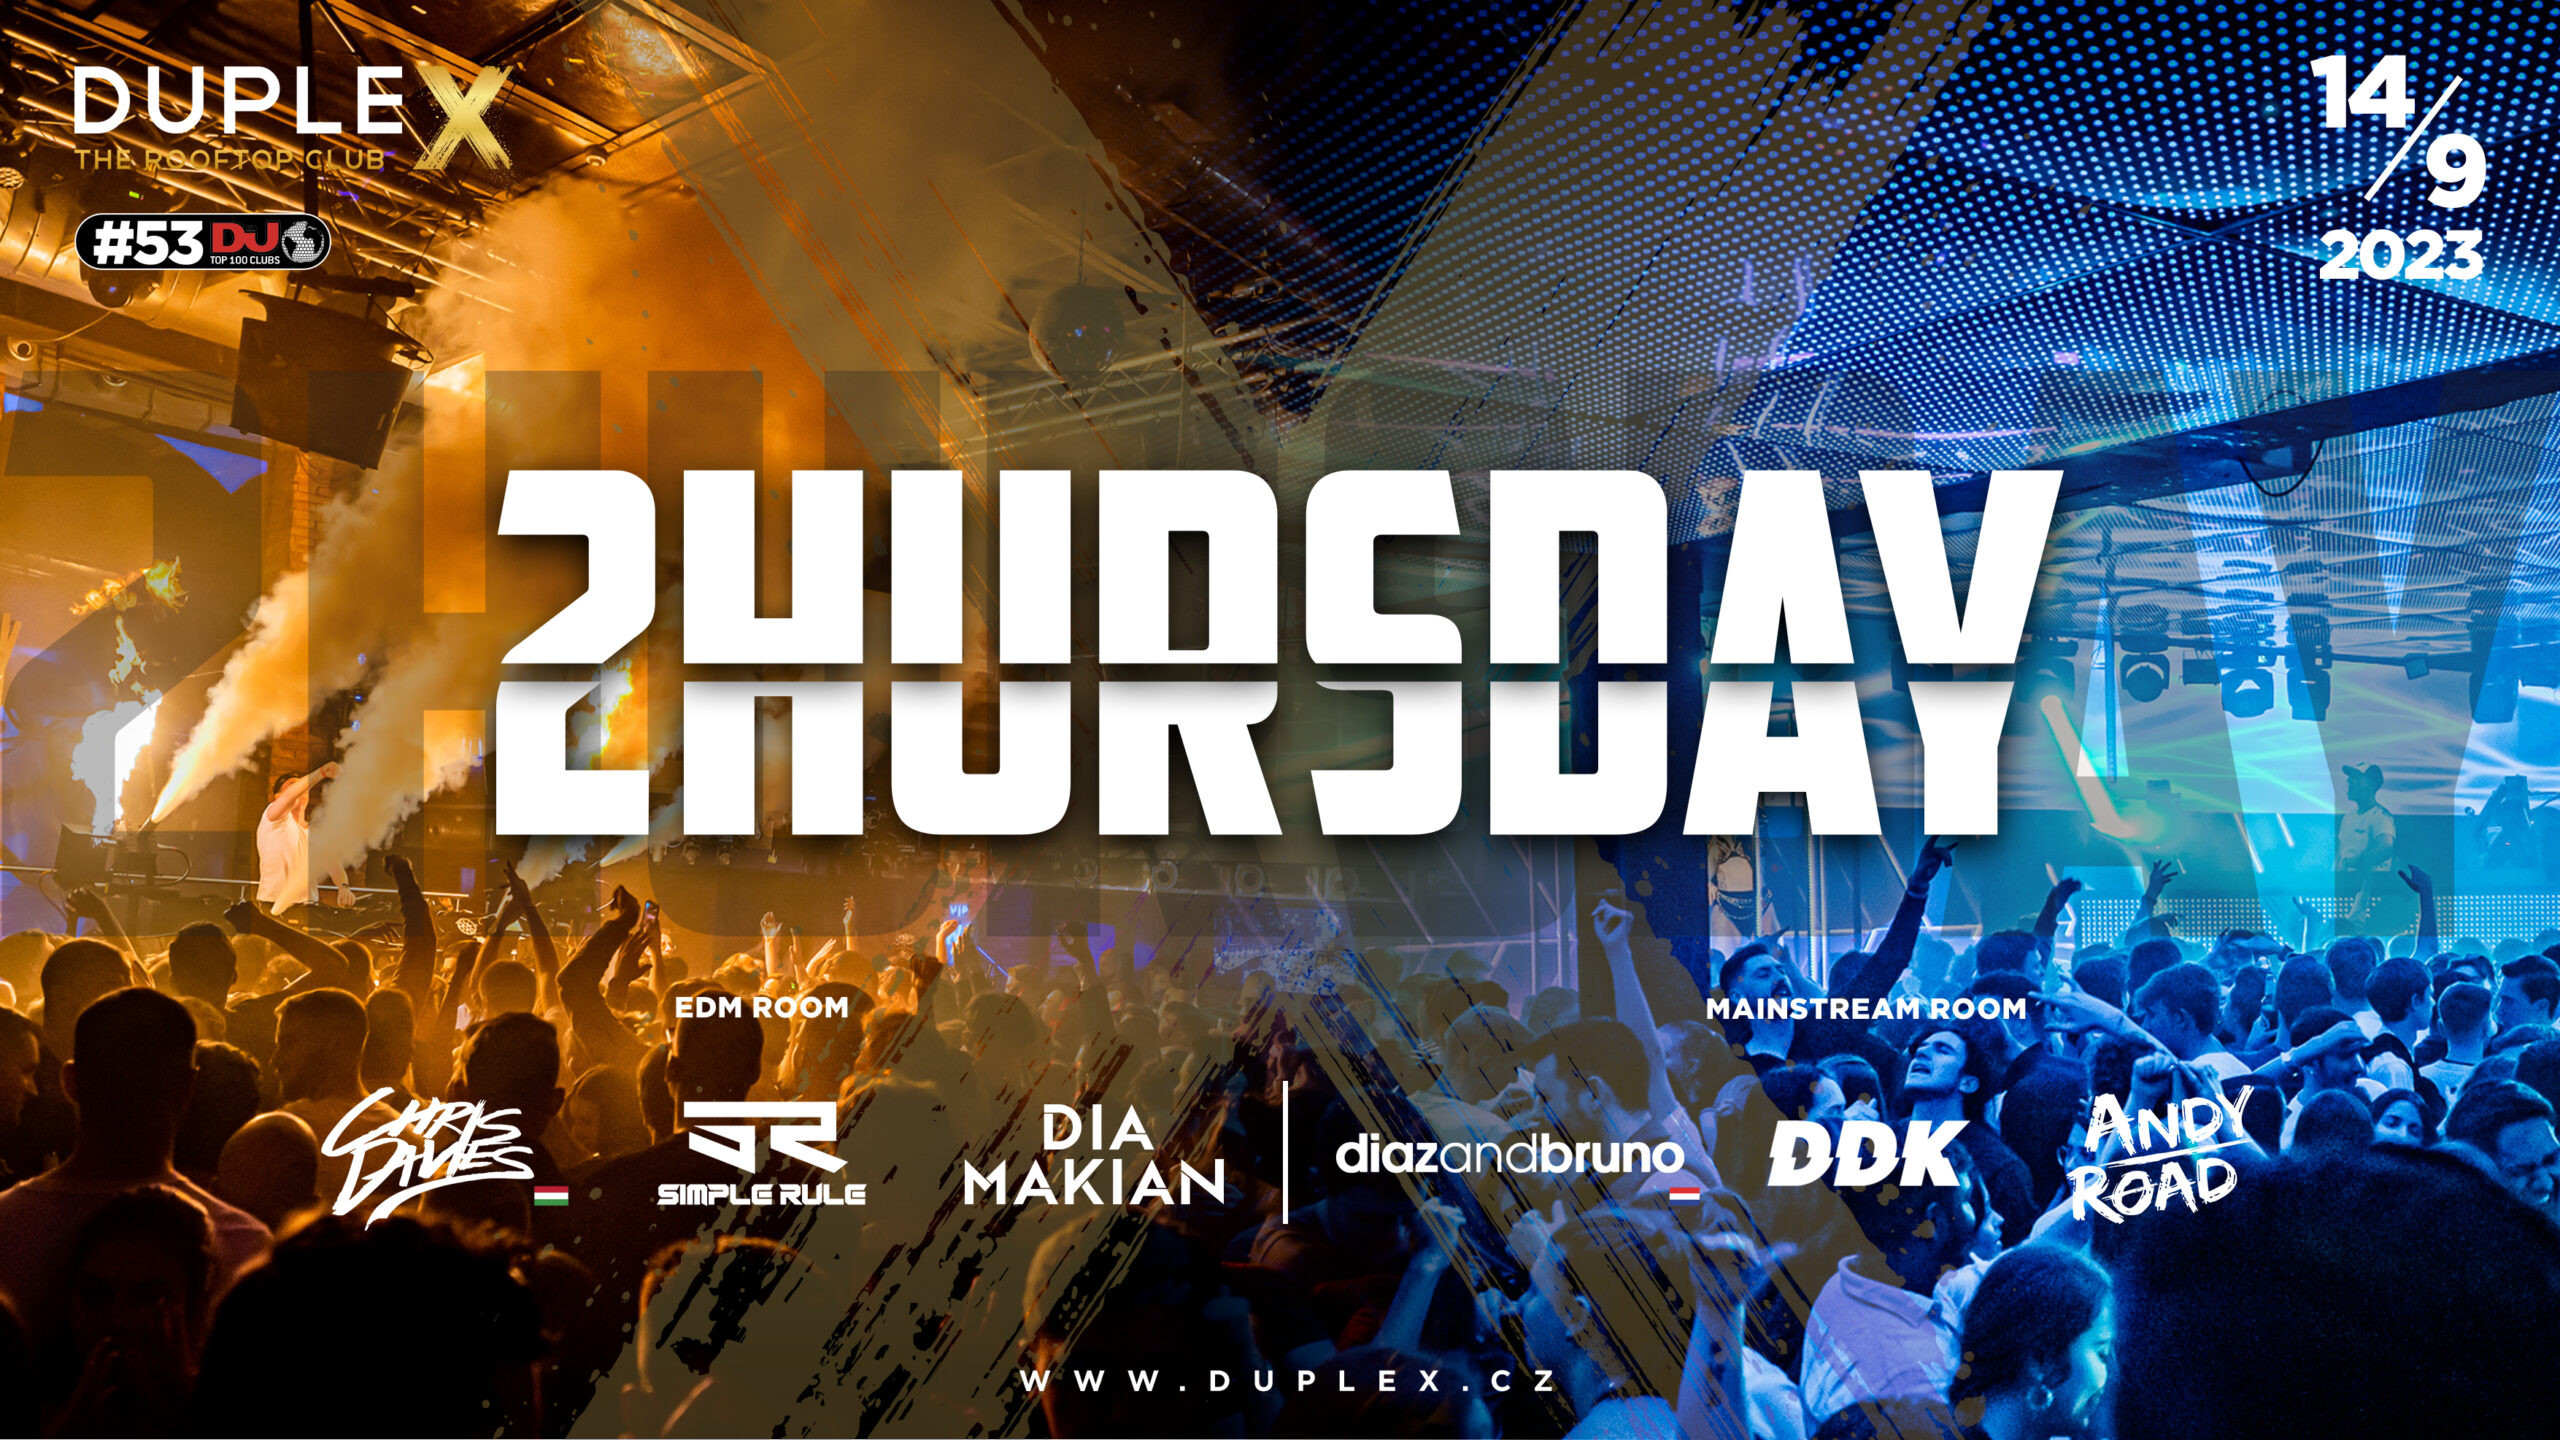 2HURSDAY: The Ultimate Thursday Night Party in Prague! Duplex